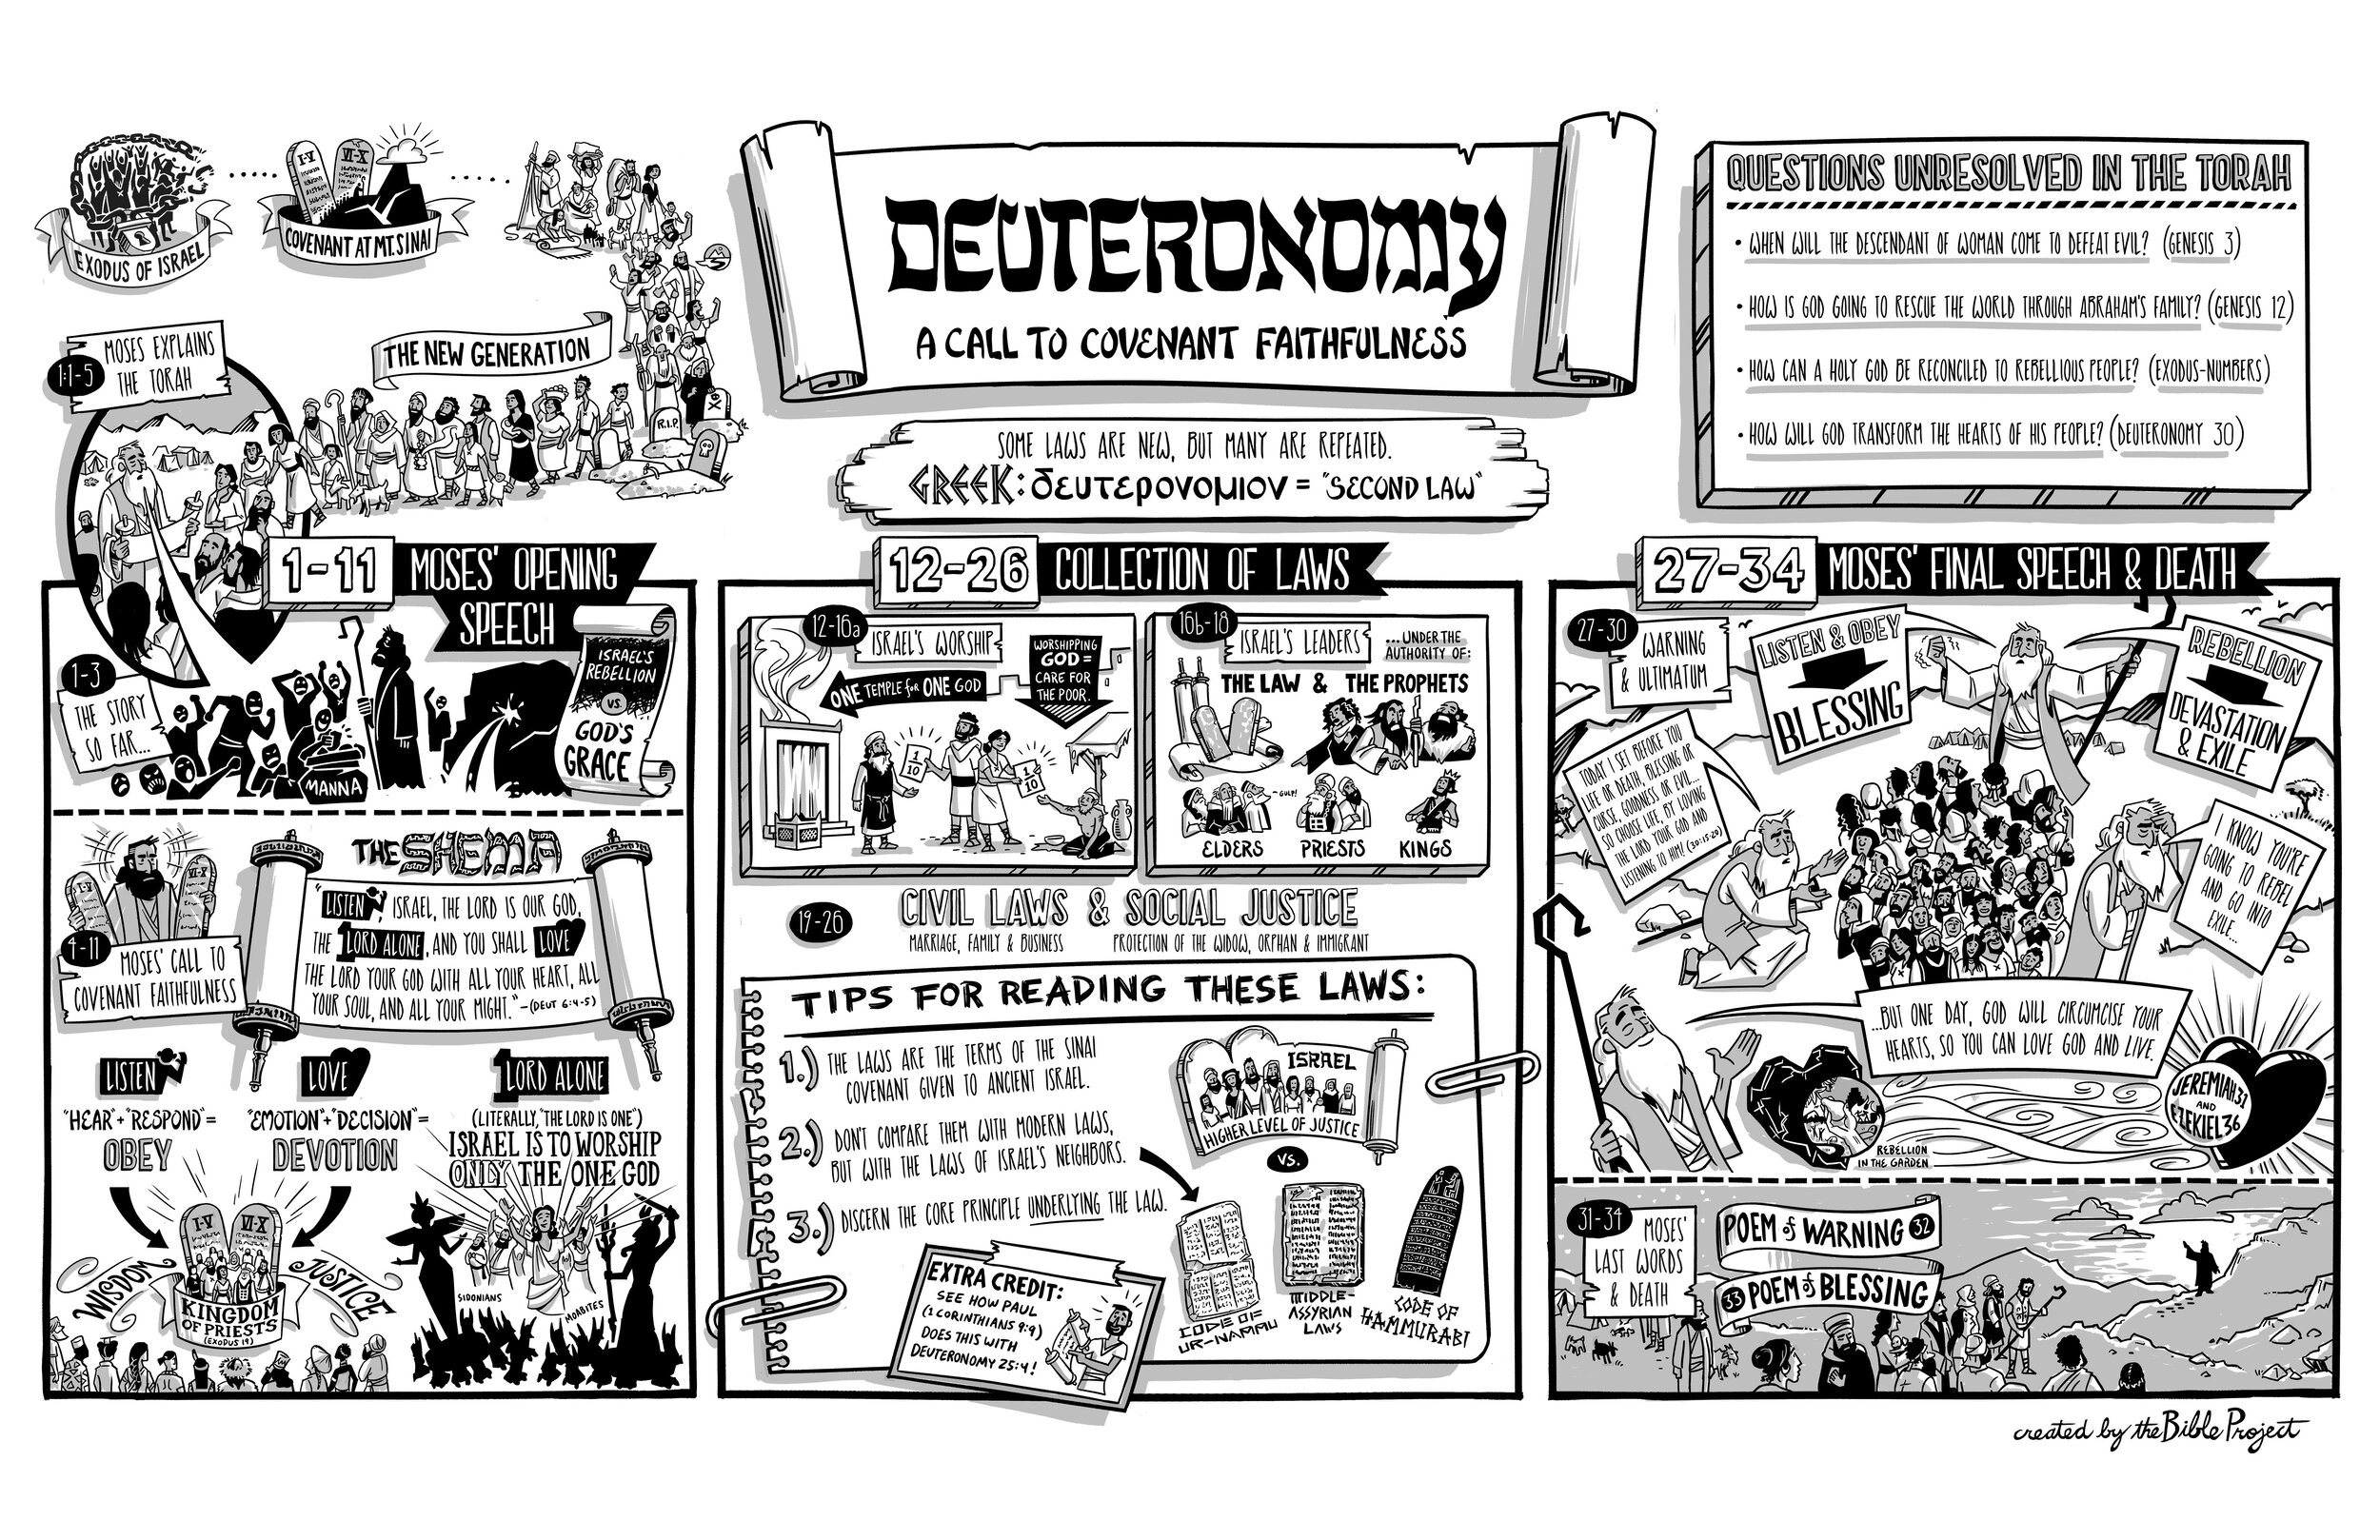 BibleProject: Deuteronomy (Video)